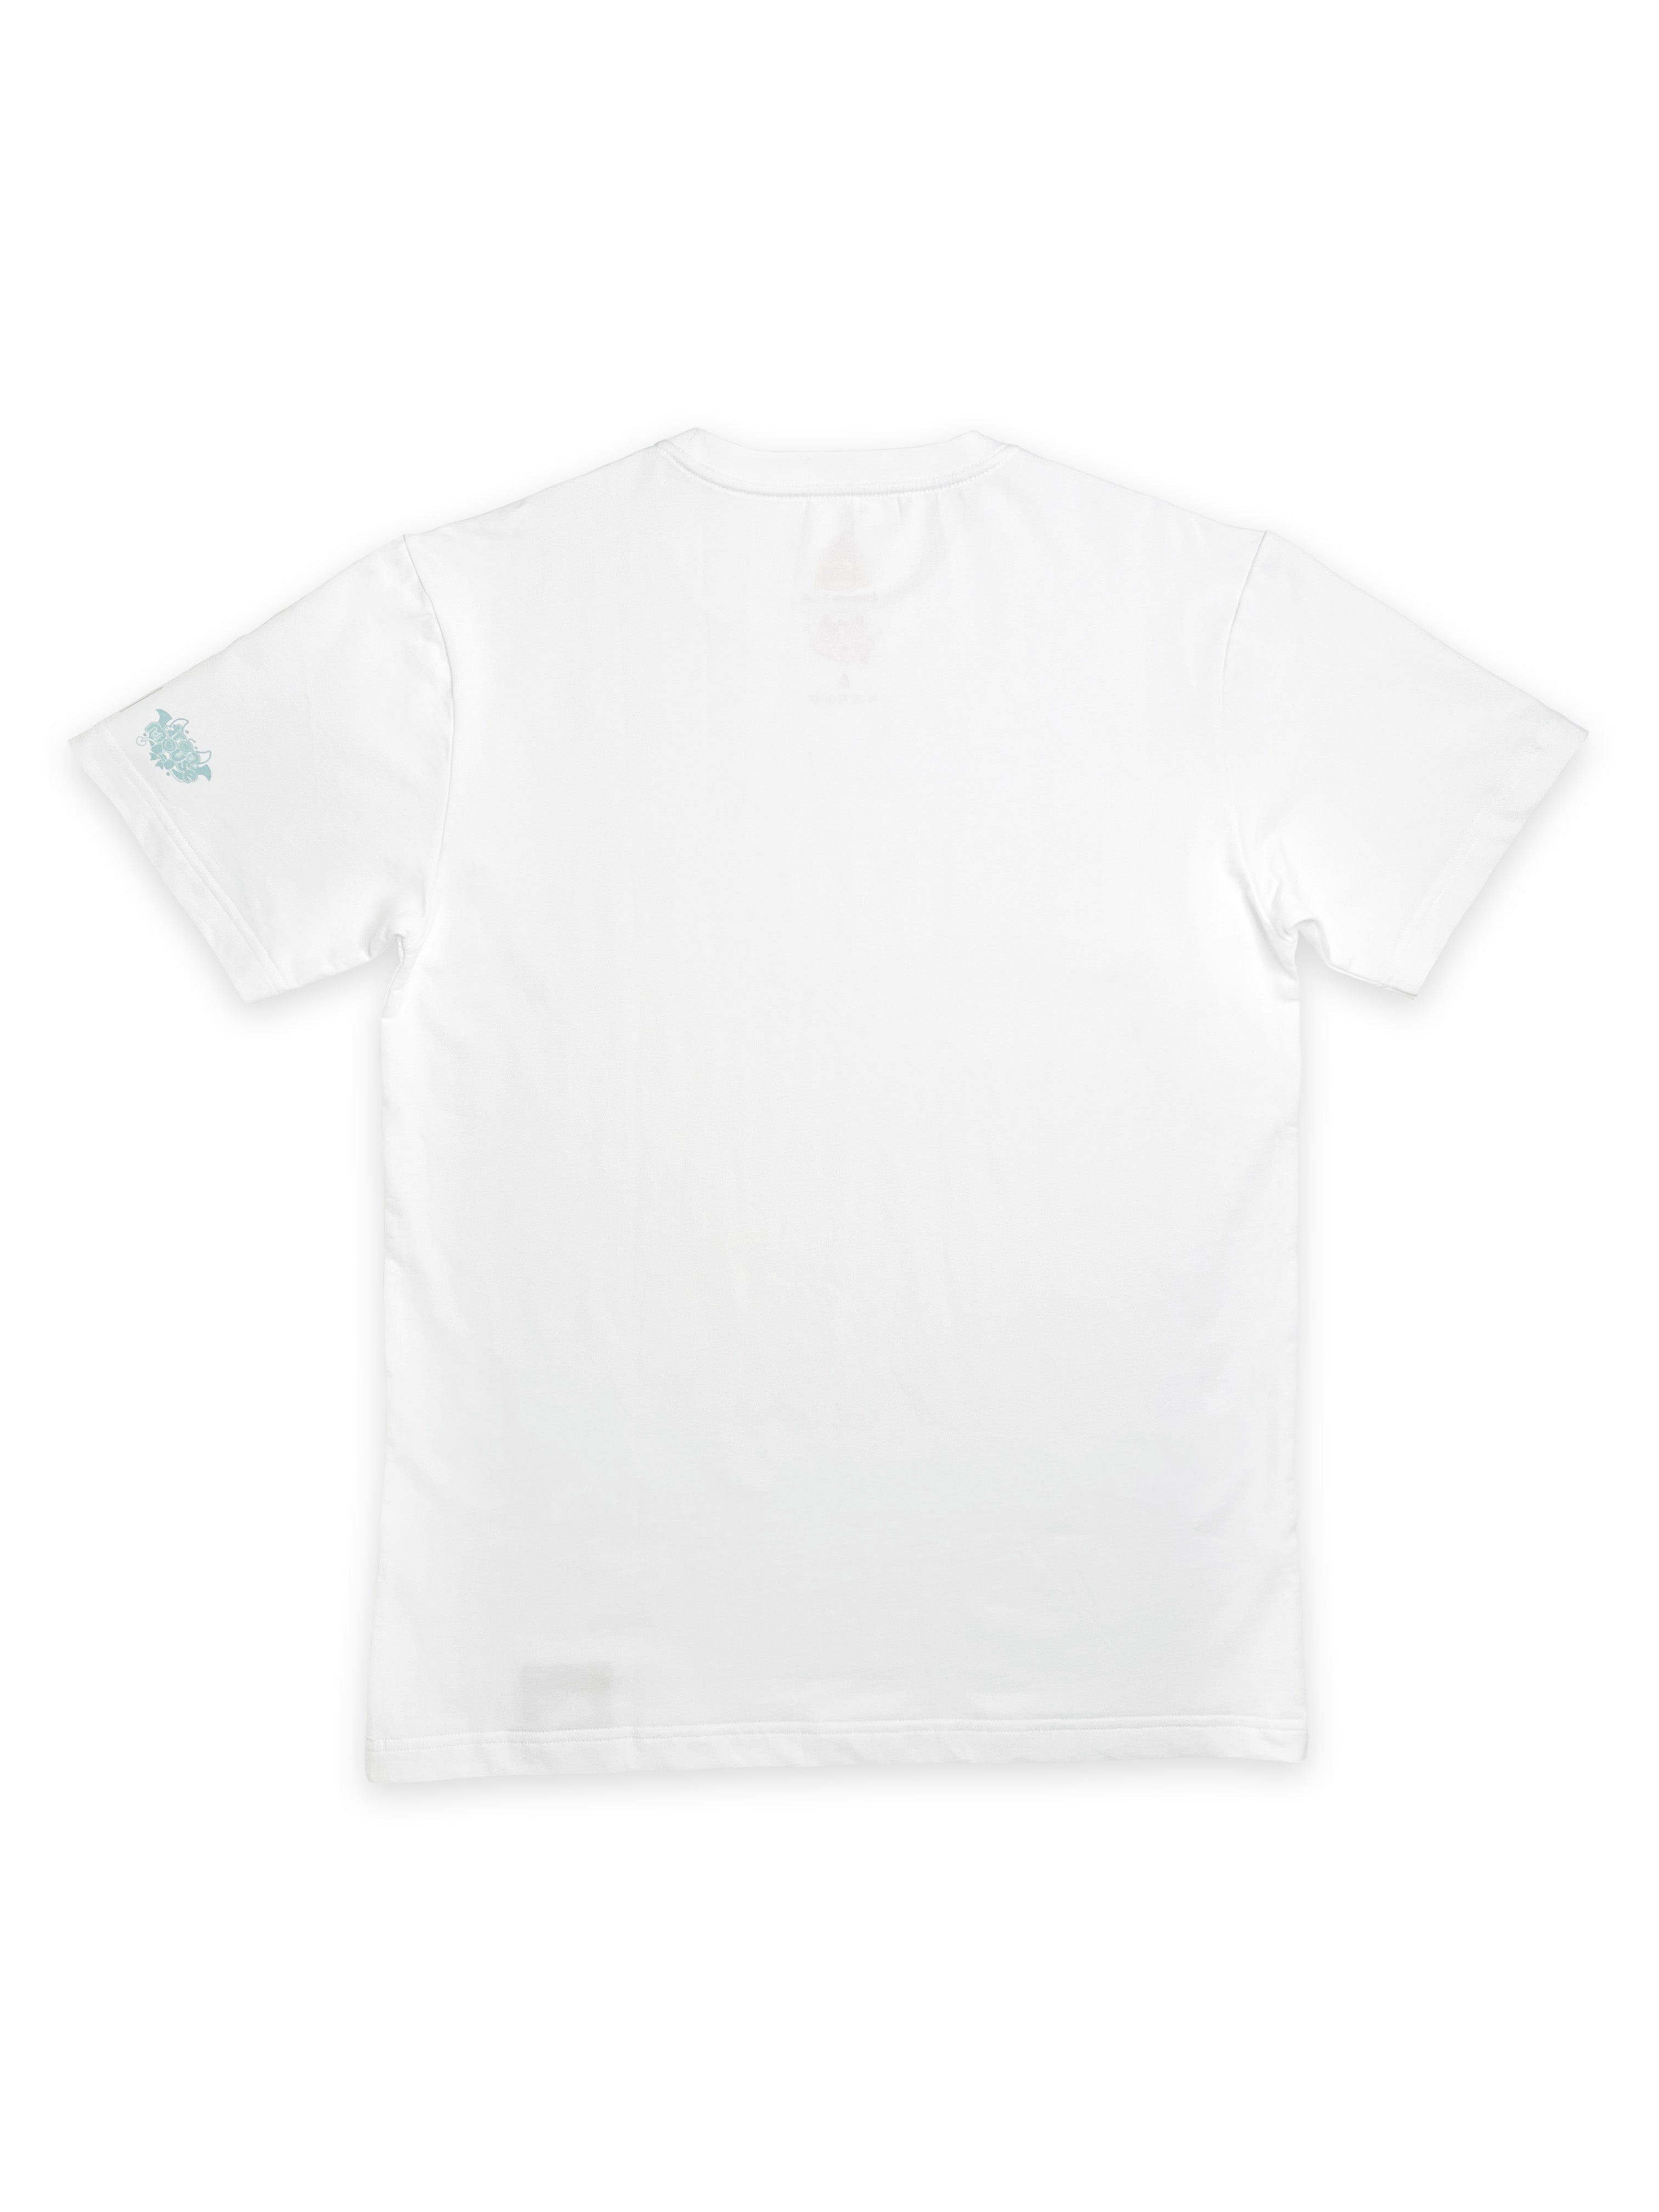 IC x Ironmouse Tshirt (White)